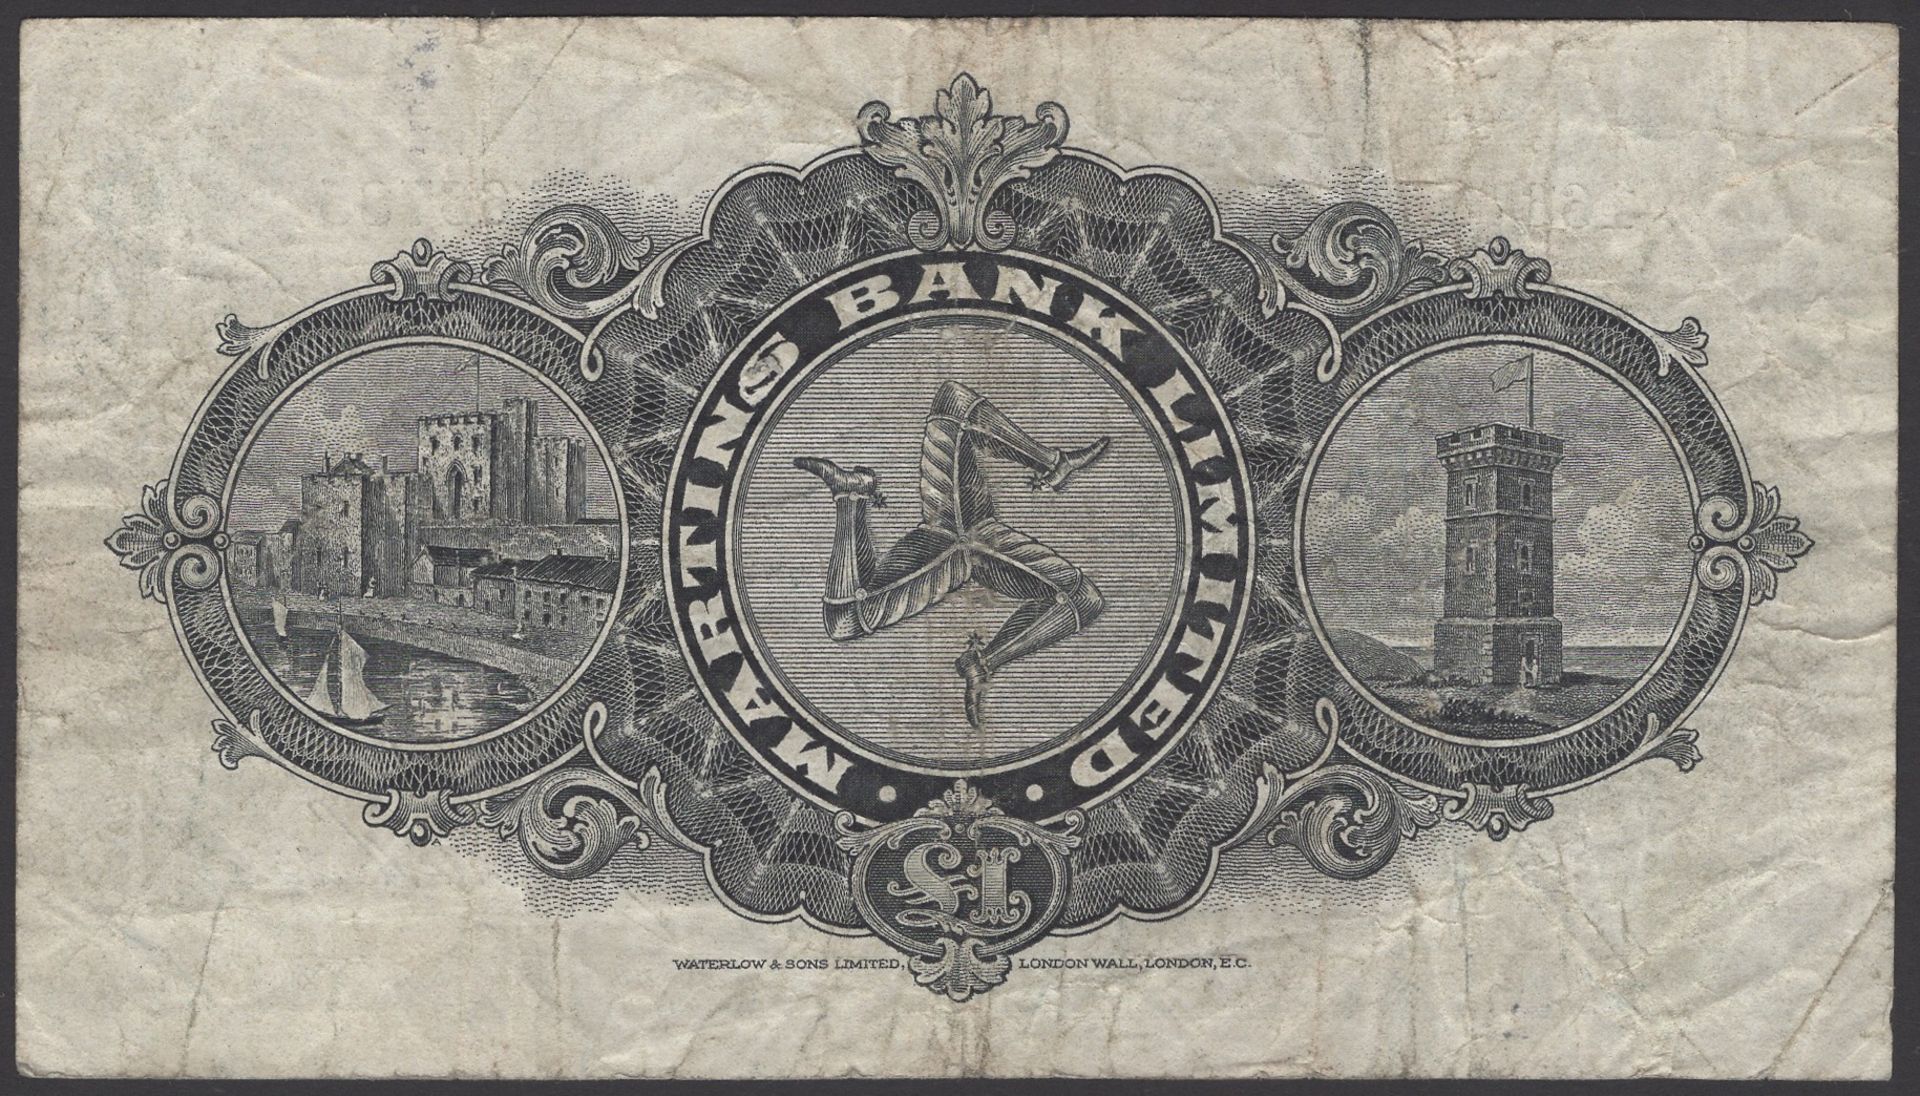 Martins Bank Limited, Â£1, 1 March 1946, serial number 166785, McKendrick signature, original... - Image 2 of 2